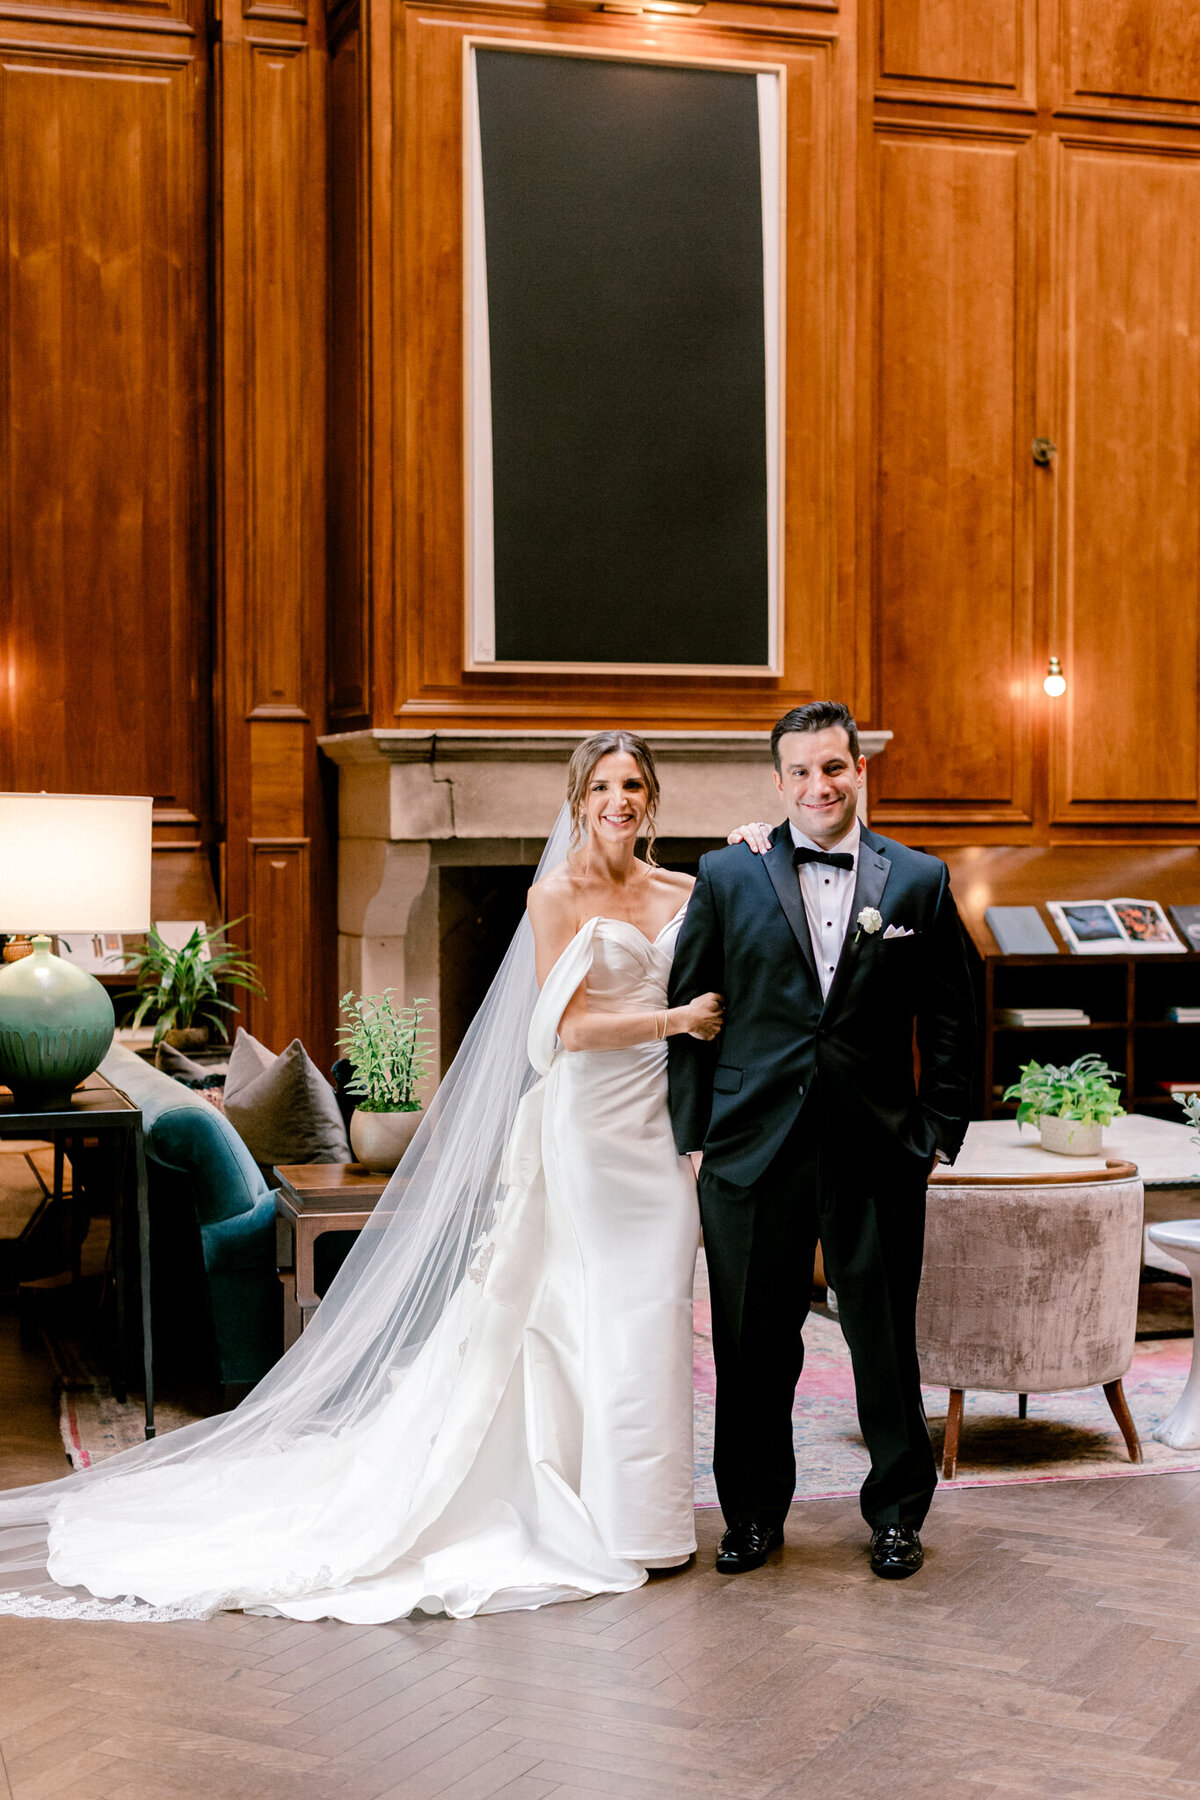 Virginia & Michael's Wedding at the Adolphus Hotel | Dallas Wedding Photographer | Sami Kathryn Photography-129